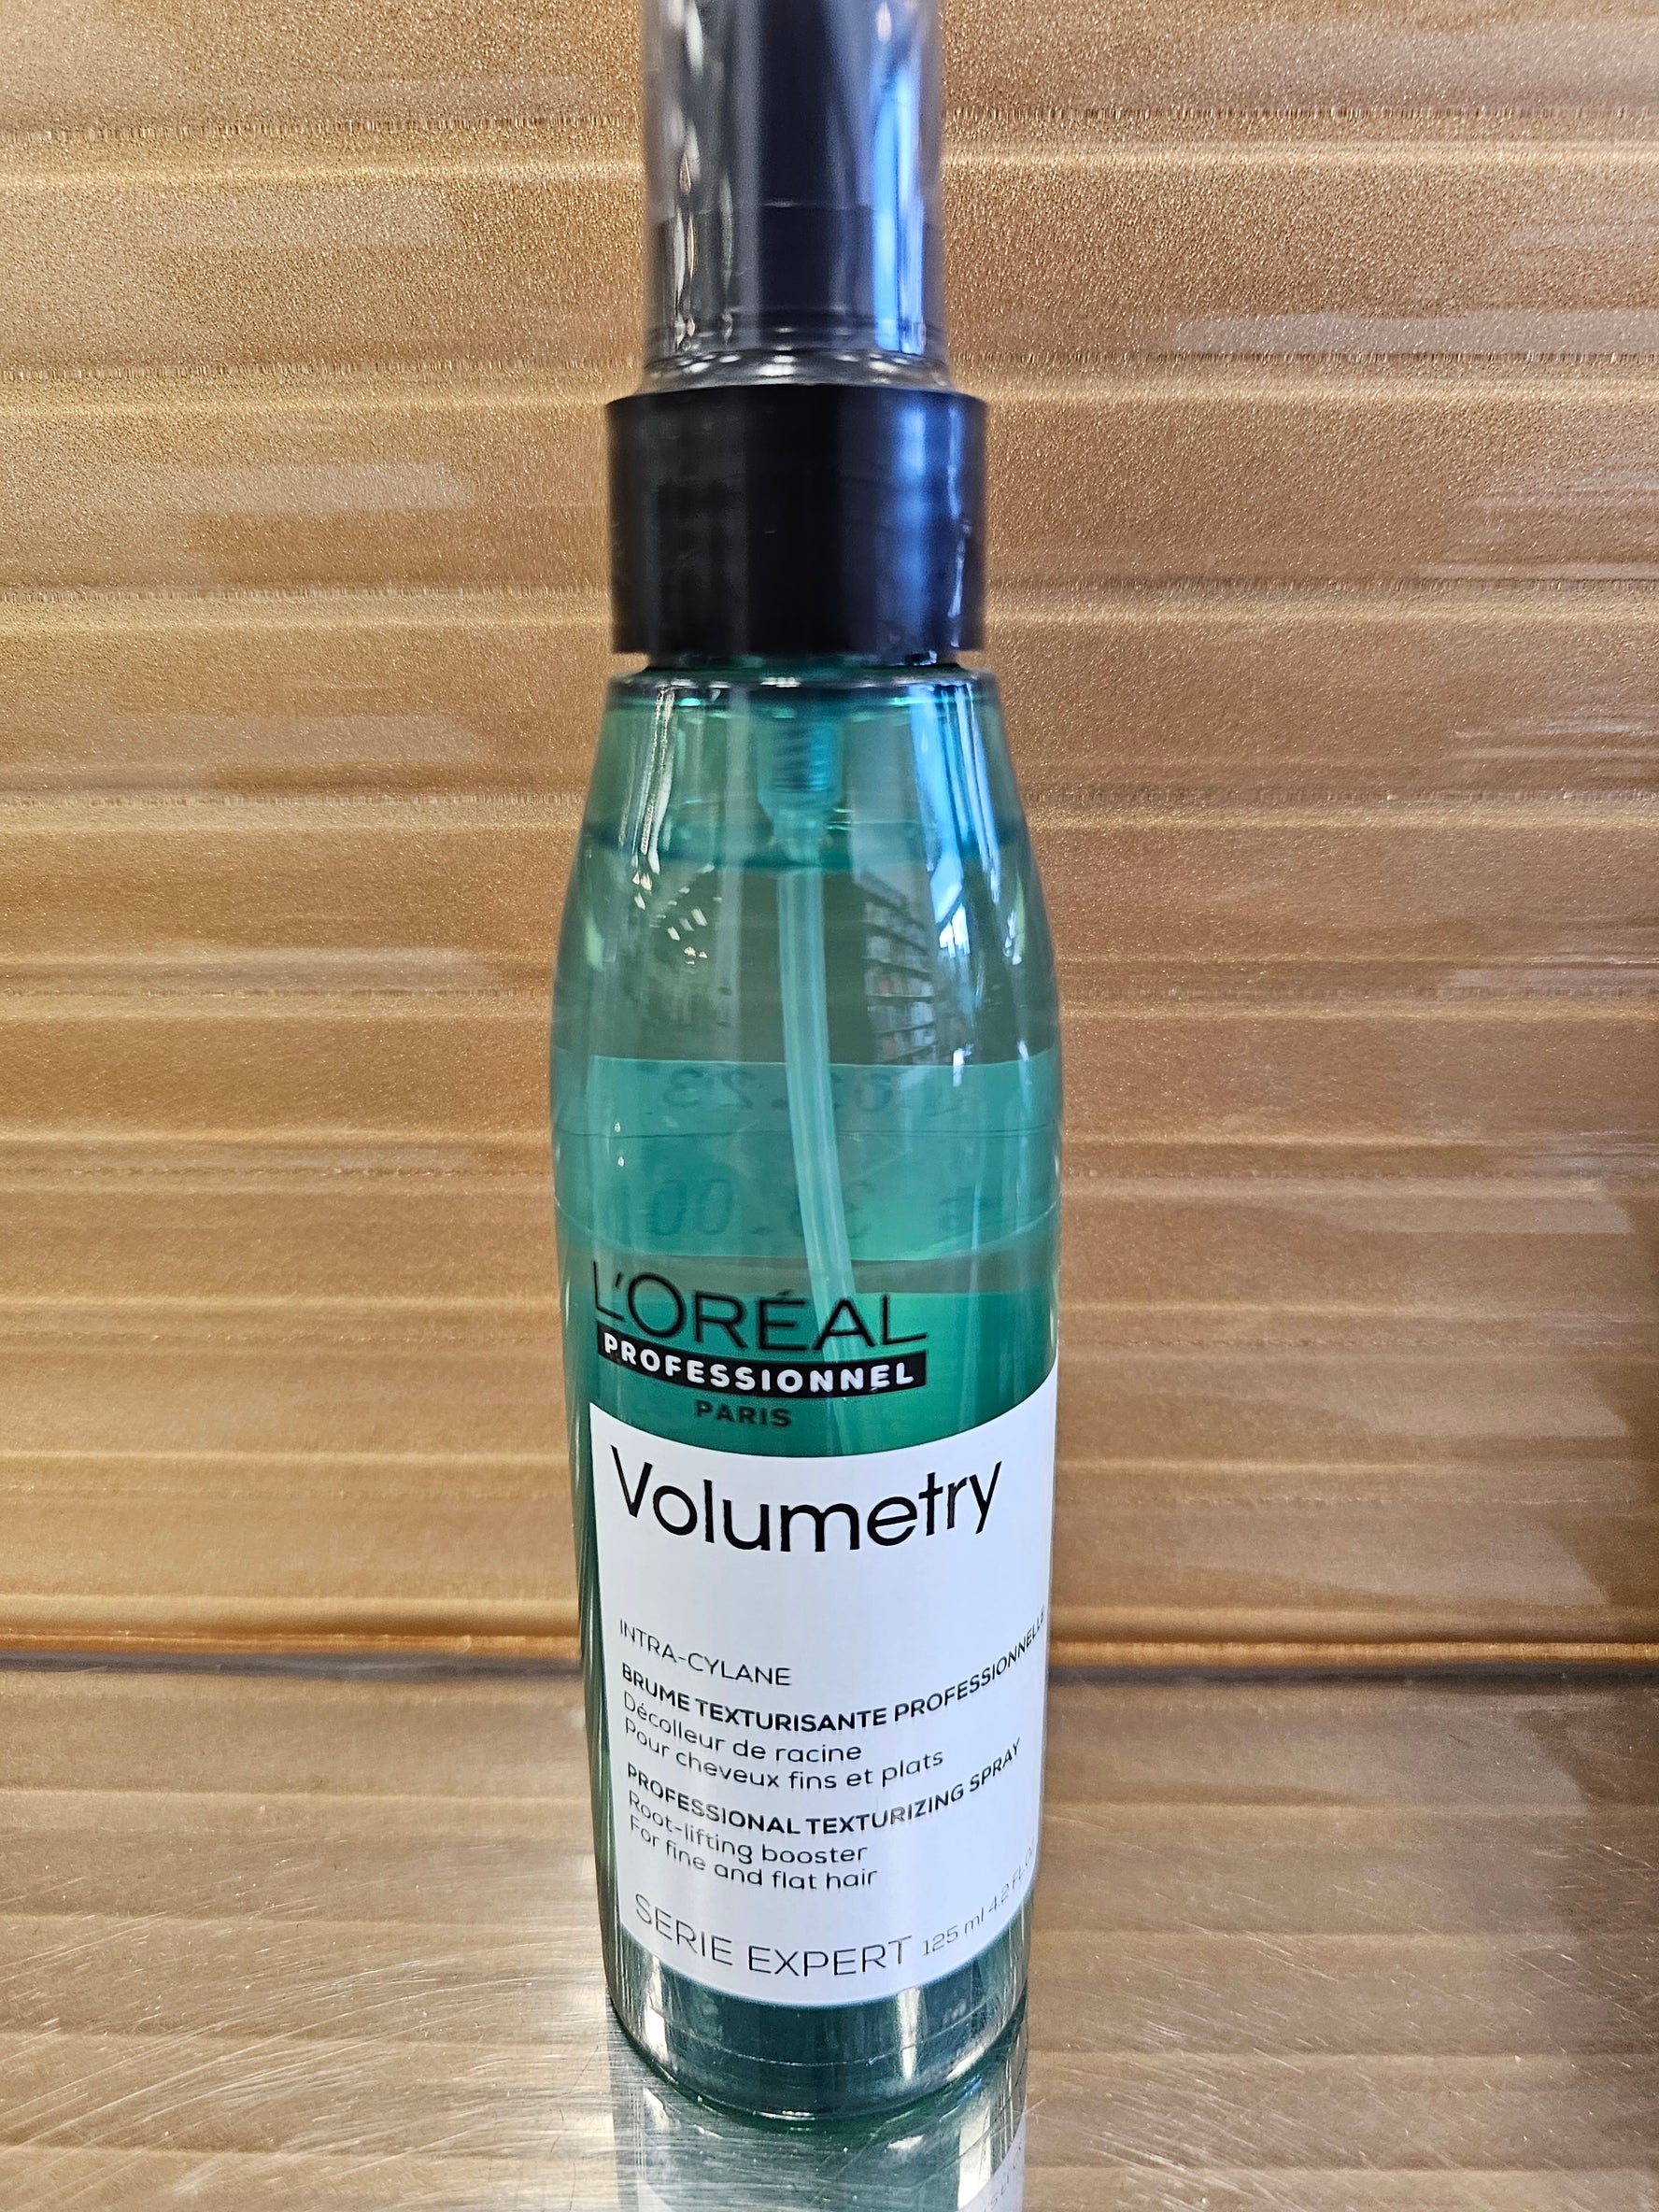 L'Oreal Volumetry Root Lifting Spray